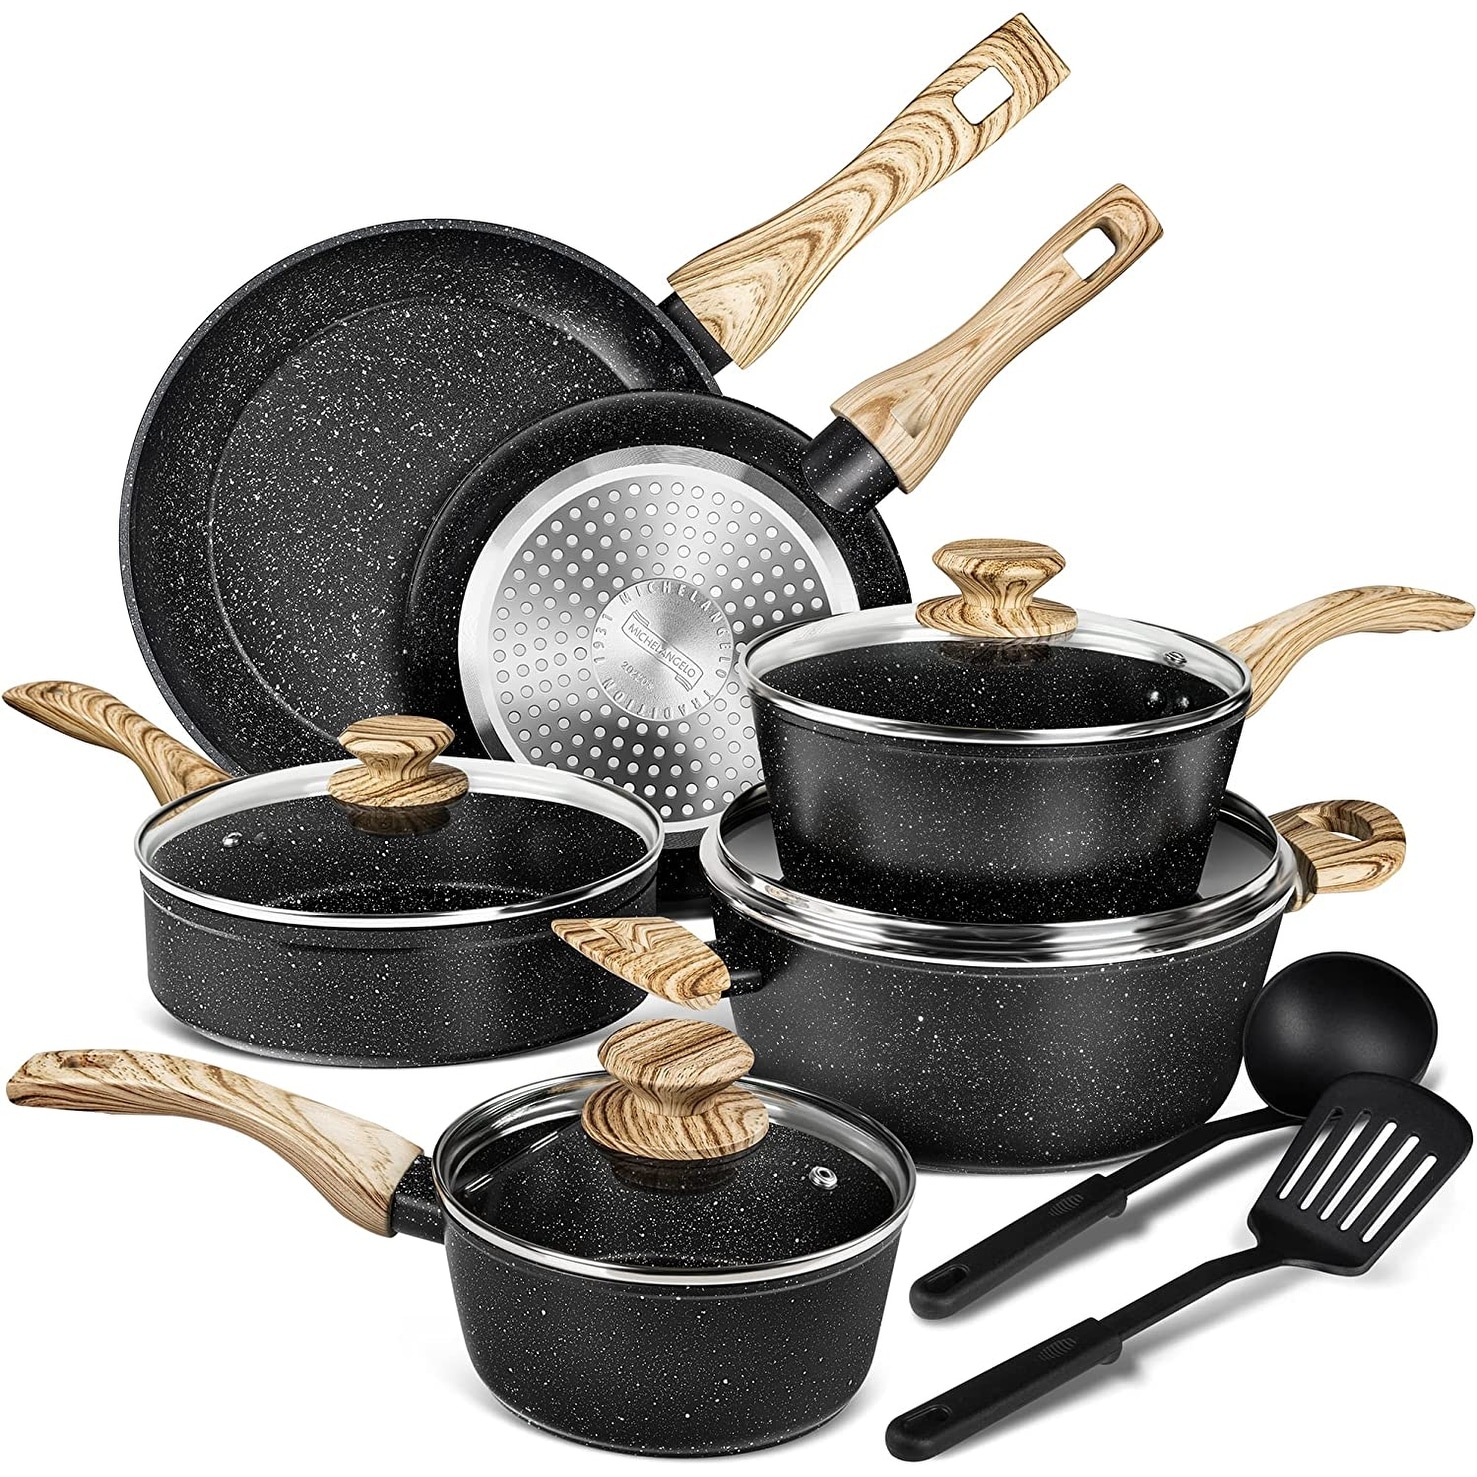 https://ak1.ostkcdn.com/images/products/is/images/direct/1e700563efafa4380ca621e5607195c248b3bedb/White-Pots-and-Pans-Set-Nonstick-Cookware-Sets%2C-12pcs-White-Granite-Cookware-Set-Induction-Compatible.jpg